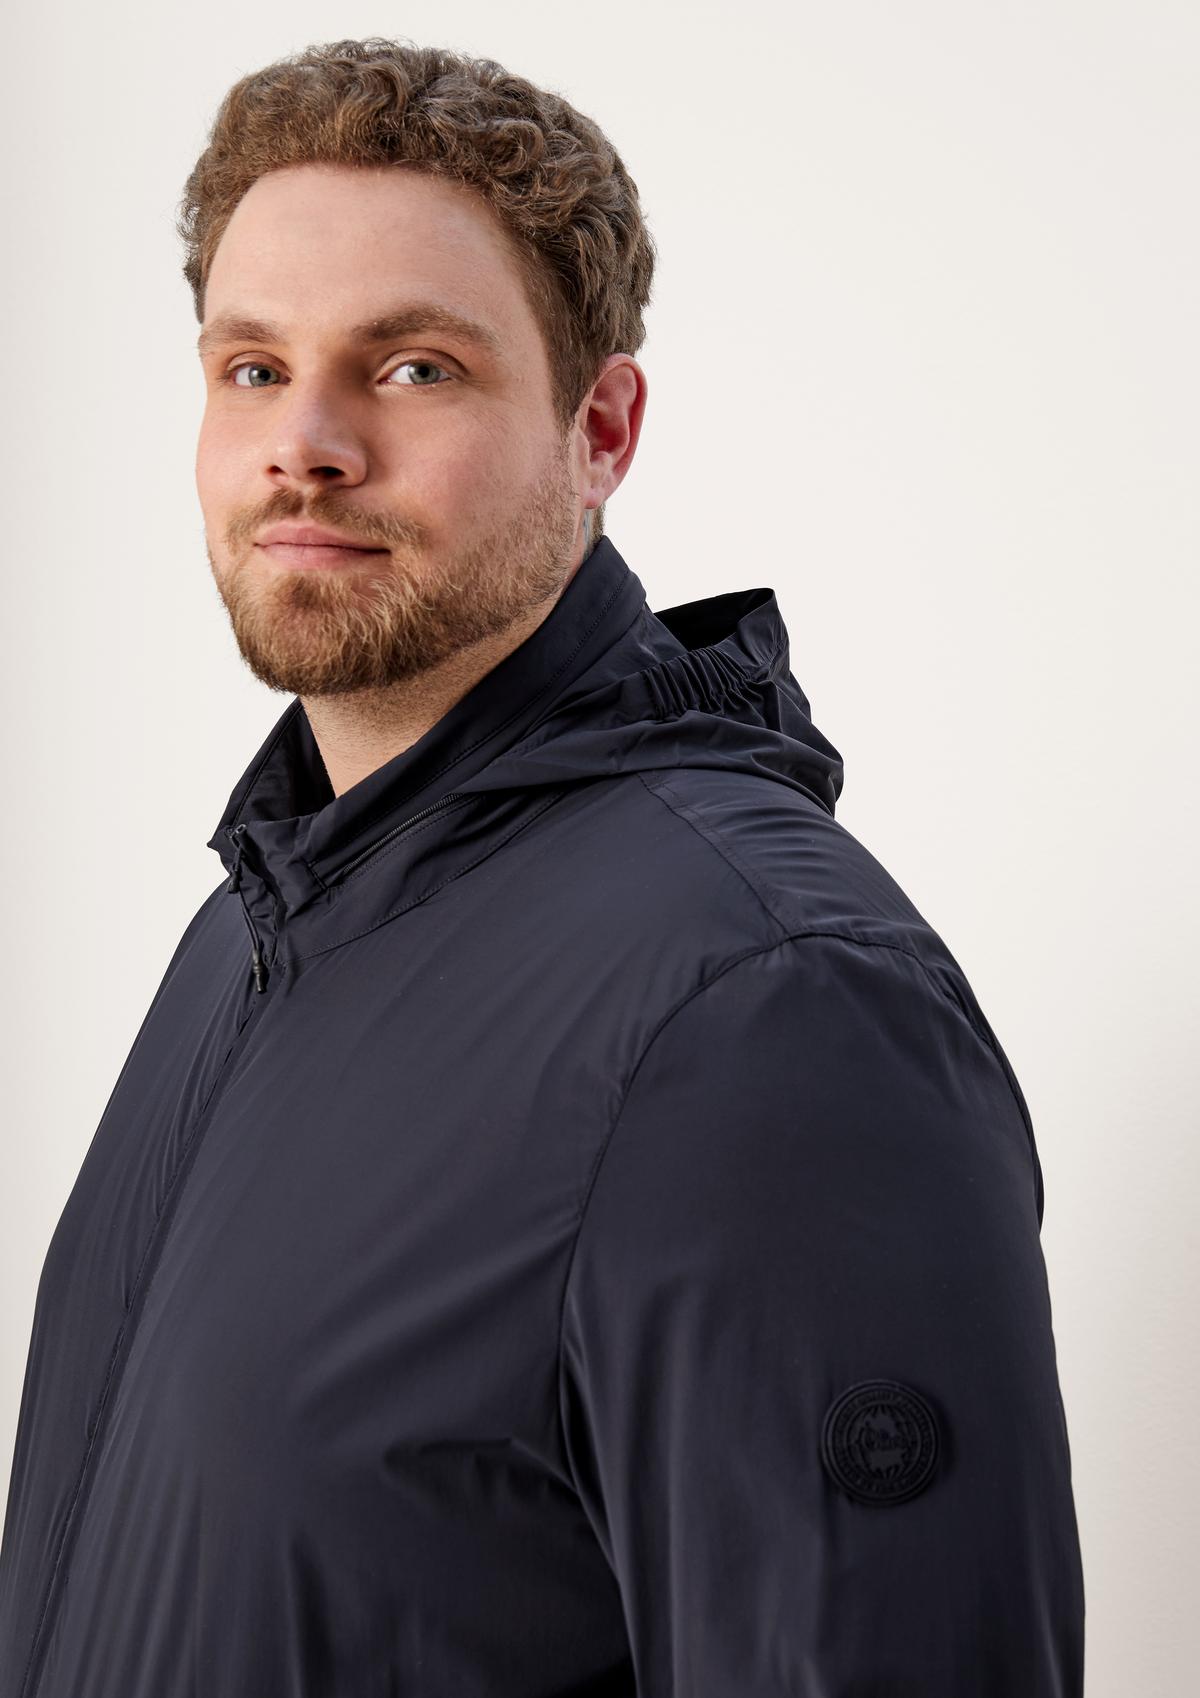 s.Oliver Packable nylon jacket